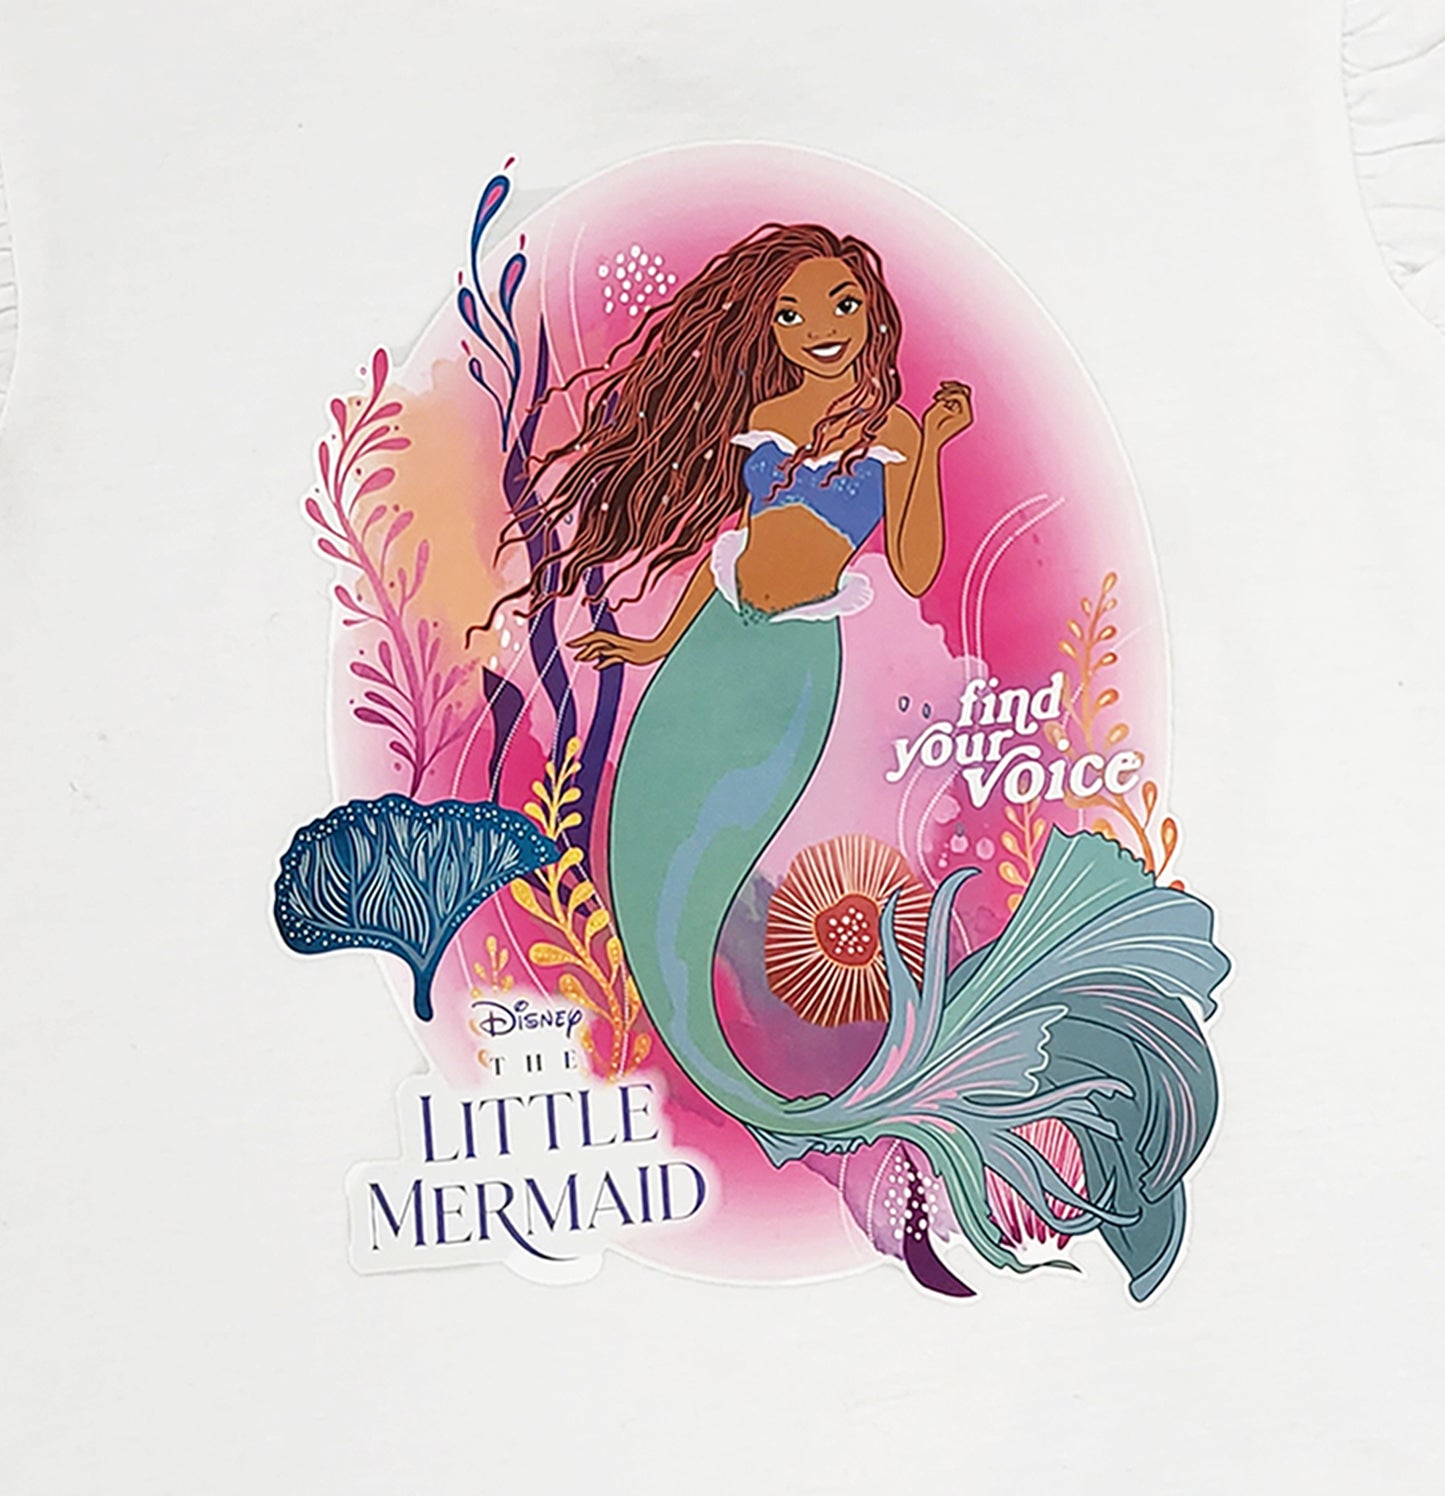 Girls Disney Little Mermaid Short Pyjamas